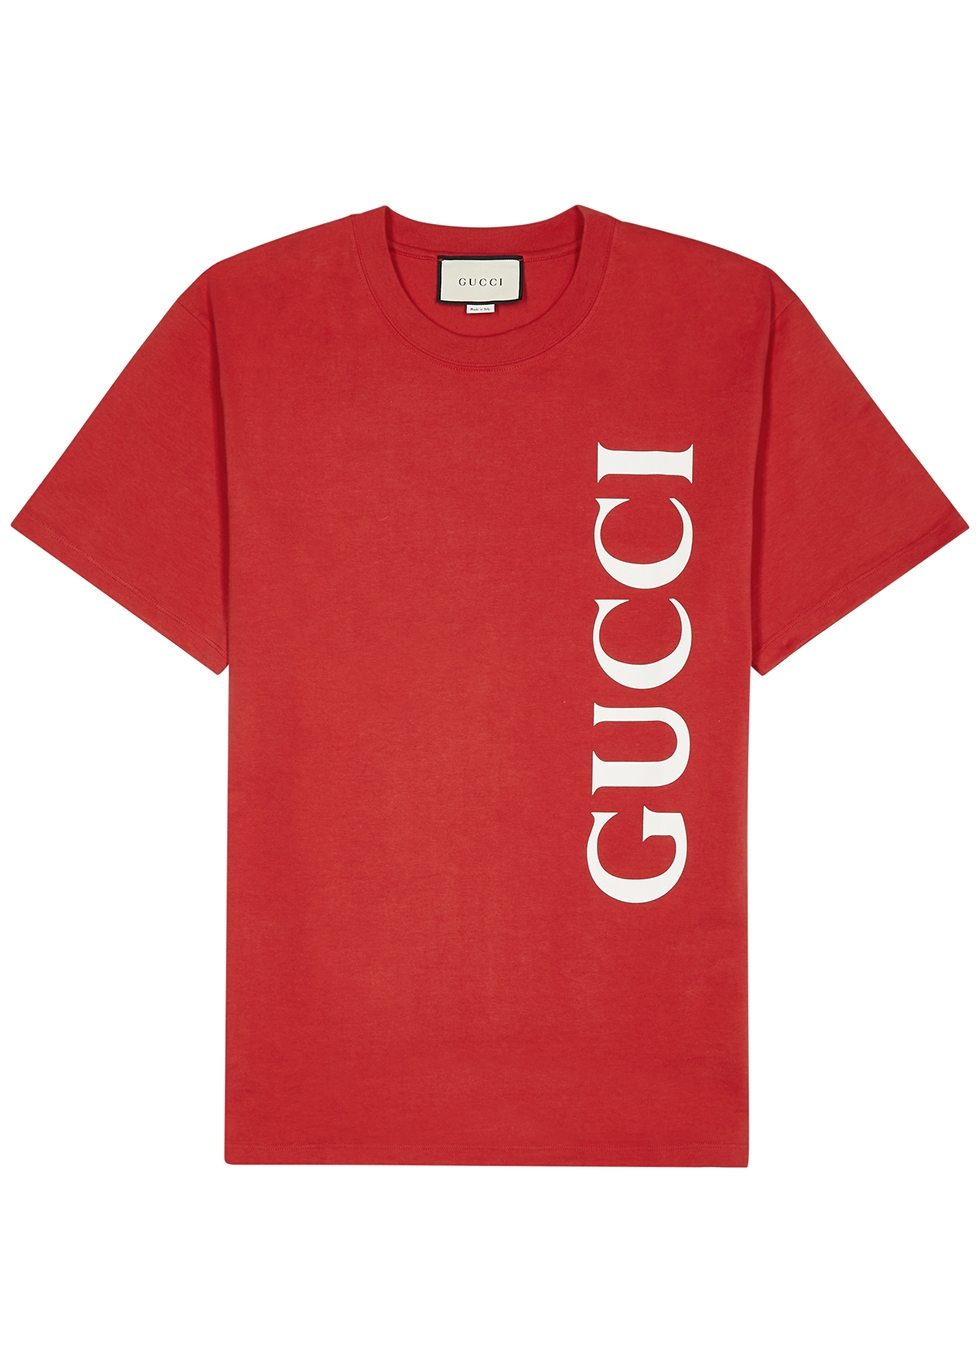 Buy > designer tee shirts mens > in stock